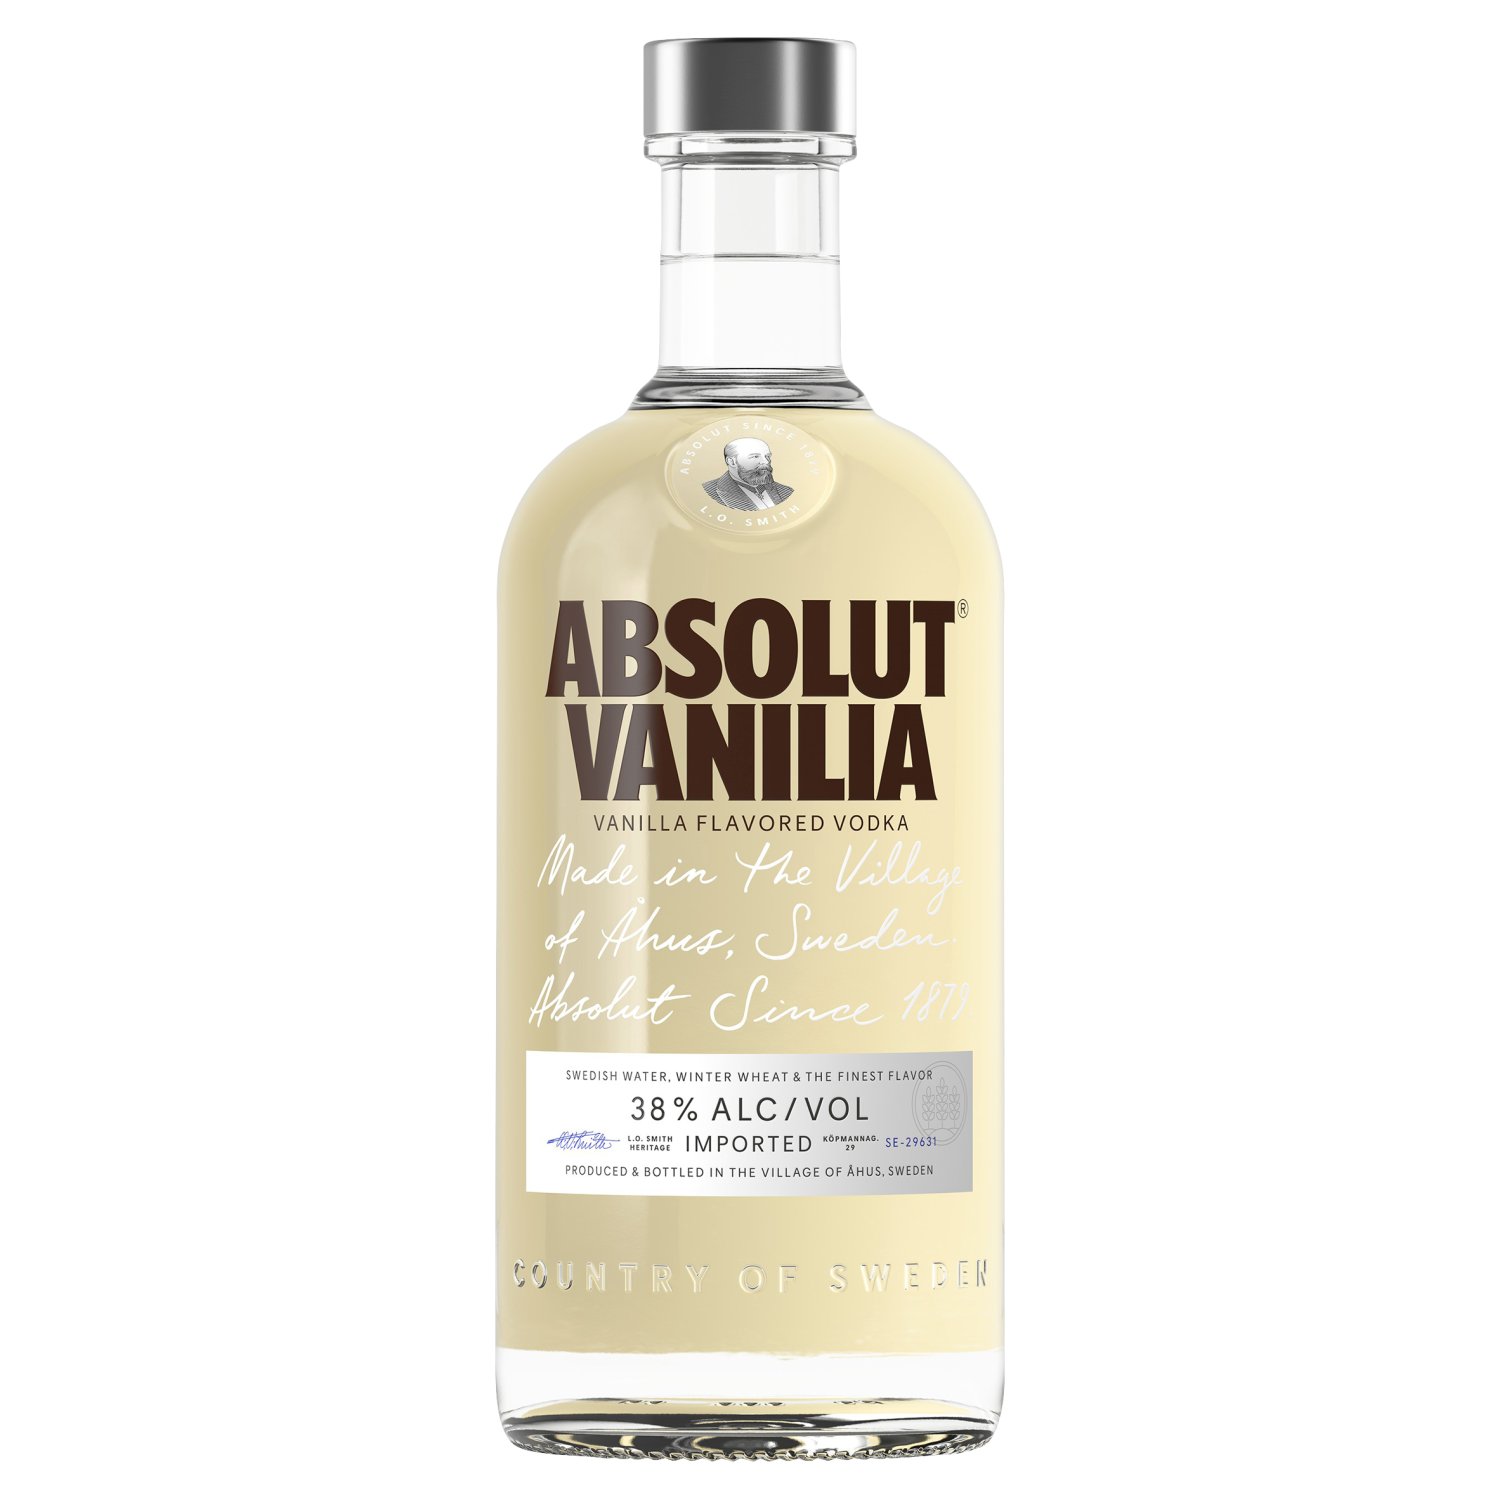 Absolut Vanilia Vodka (70 cl)